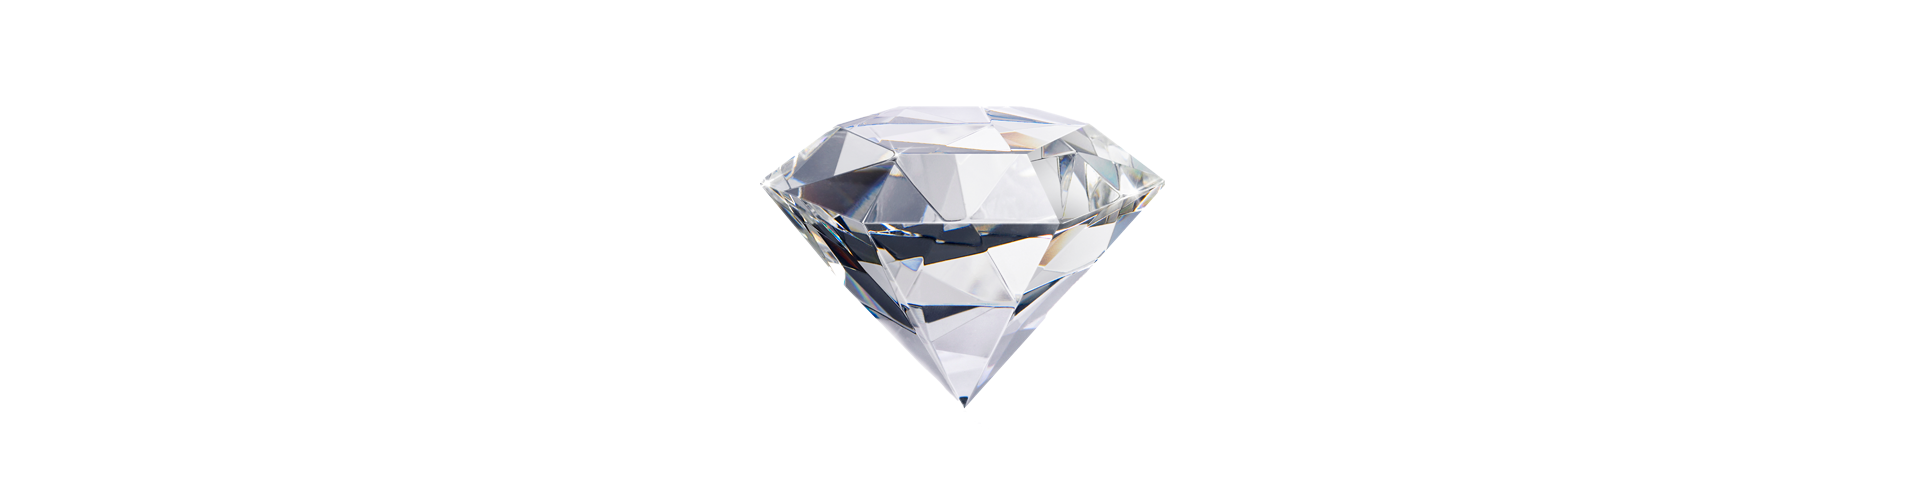 Certified diamonds for investement | GV